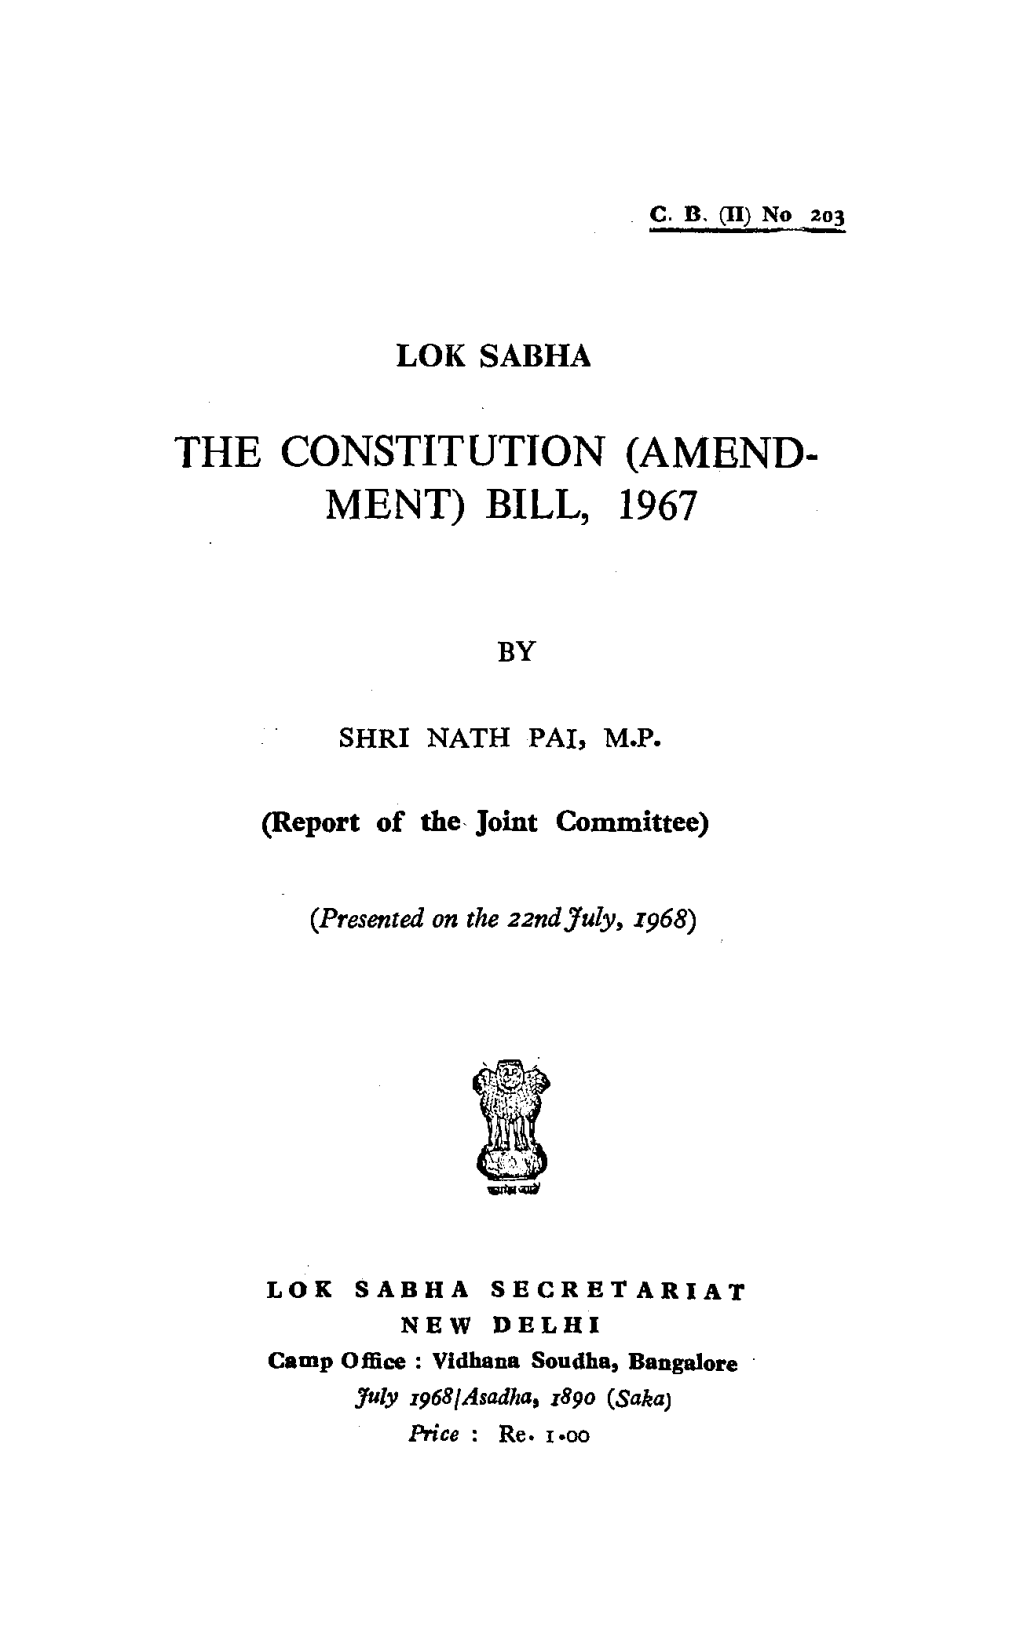 The Constitution (Amend- Ment) Bill, 1967